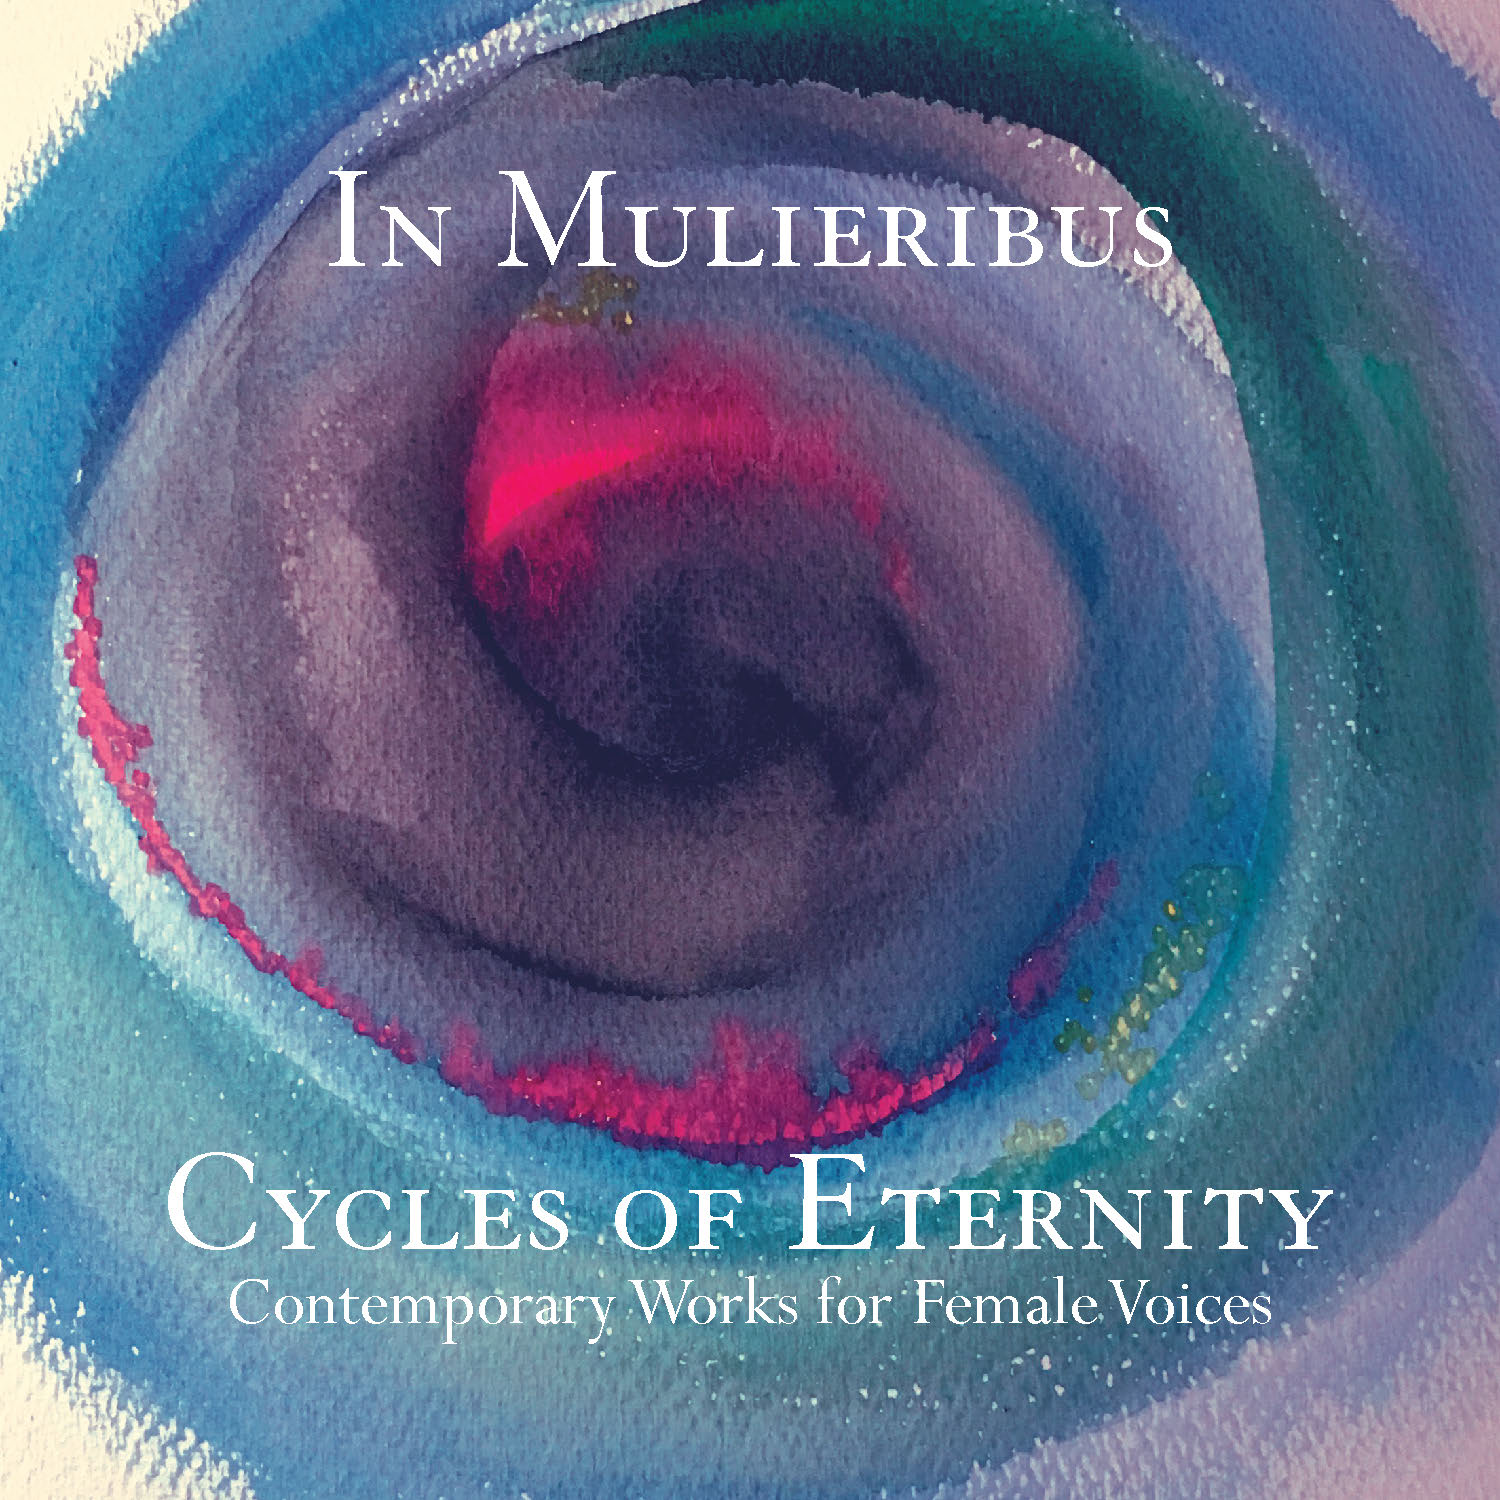 album cover image In Mulieribus: Cycles of Eternity